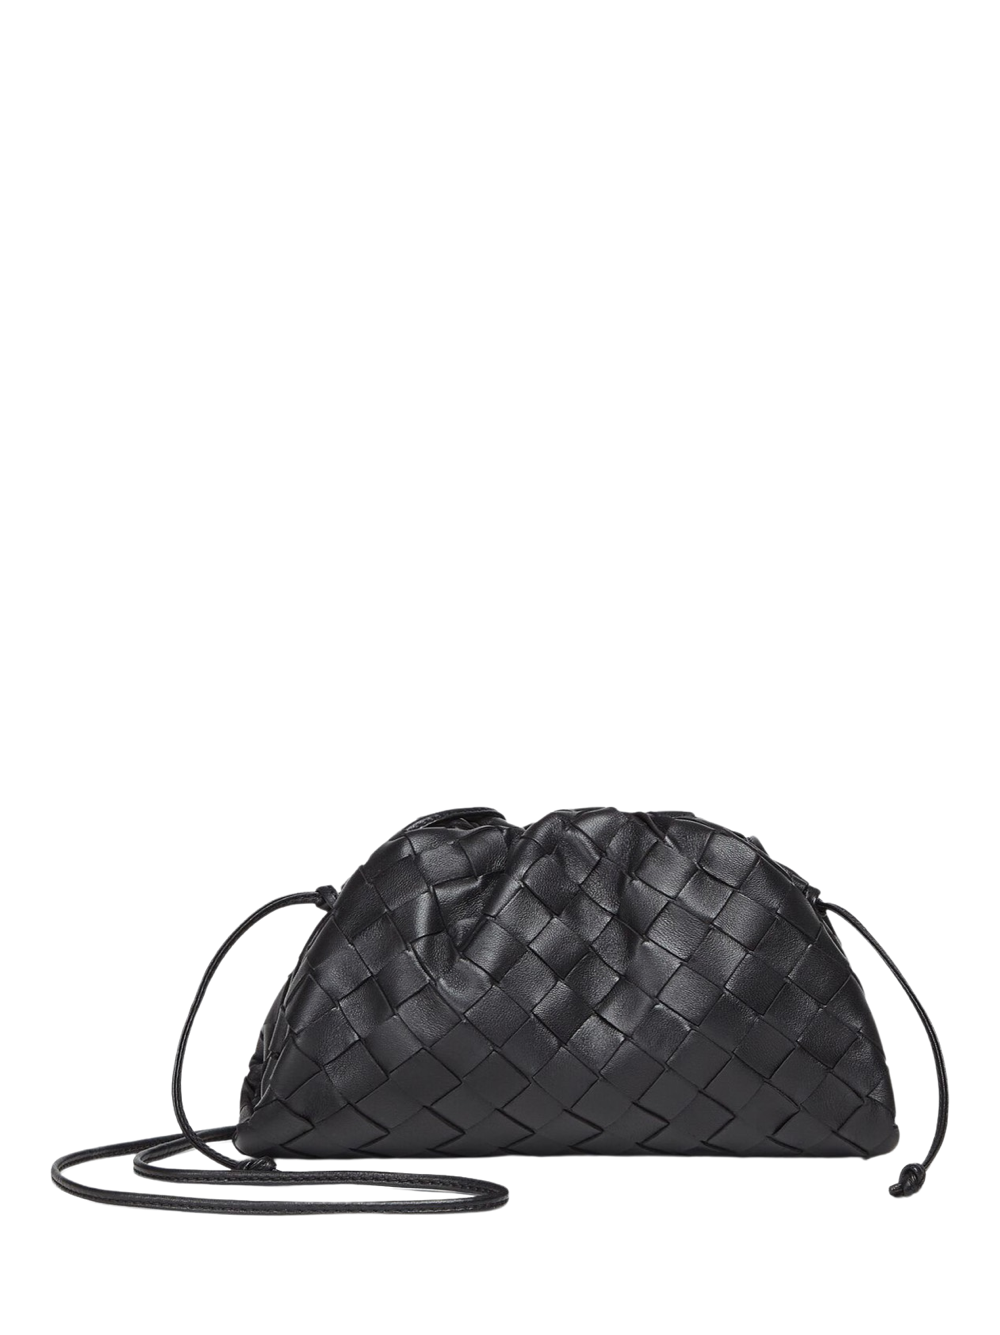 BOTTEGA VENETA: The mini pouch clutch in woven leather - White